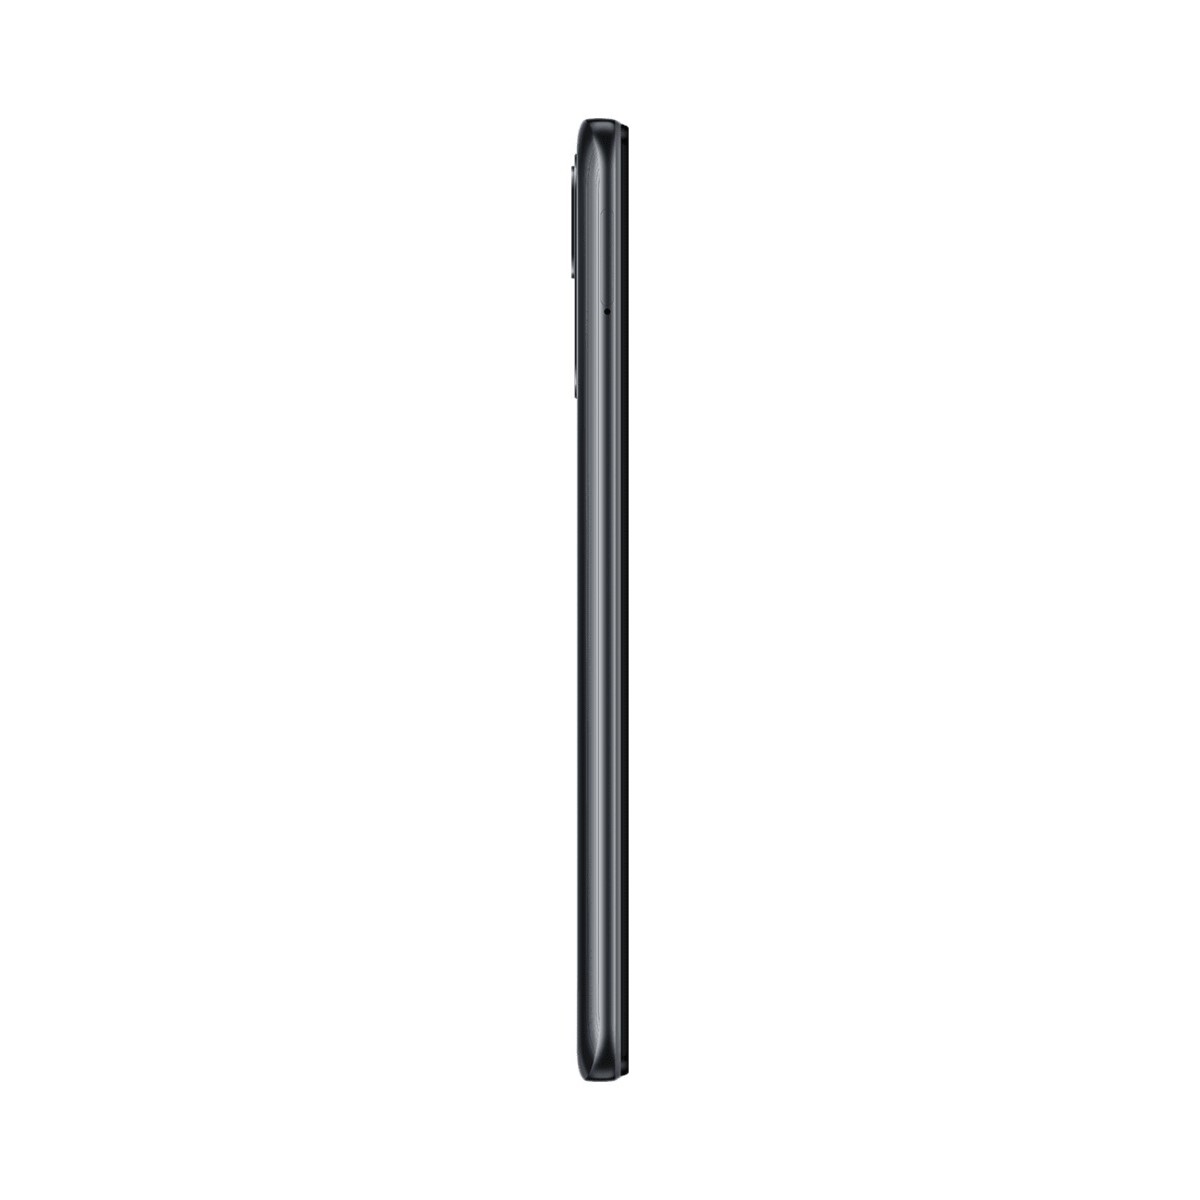 Xiaomi redmi 10a 128gb / 4gb ram dual sim Graphite gray